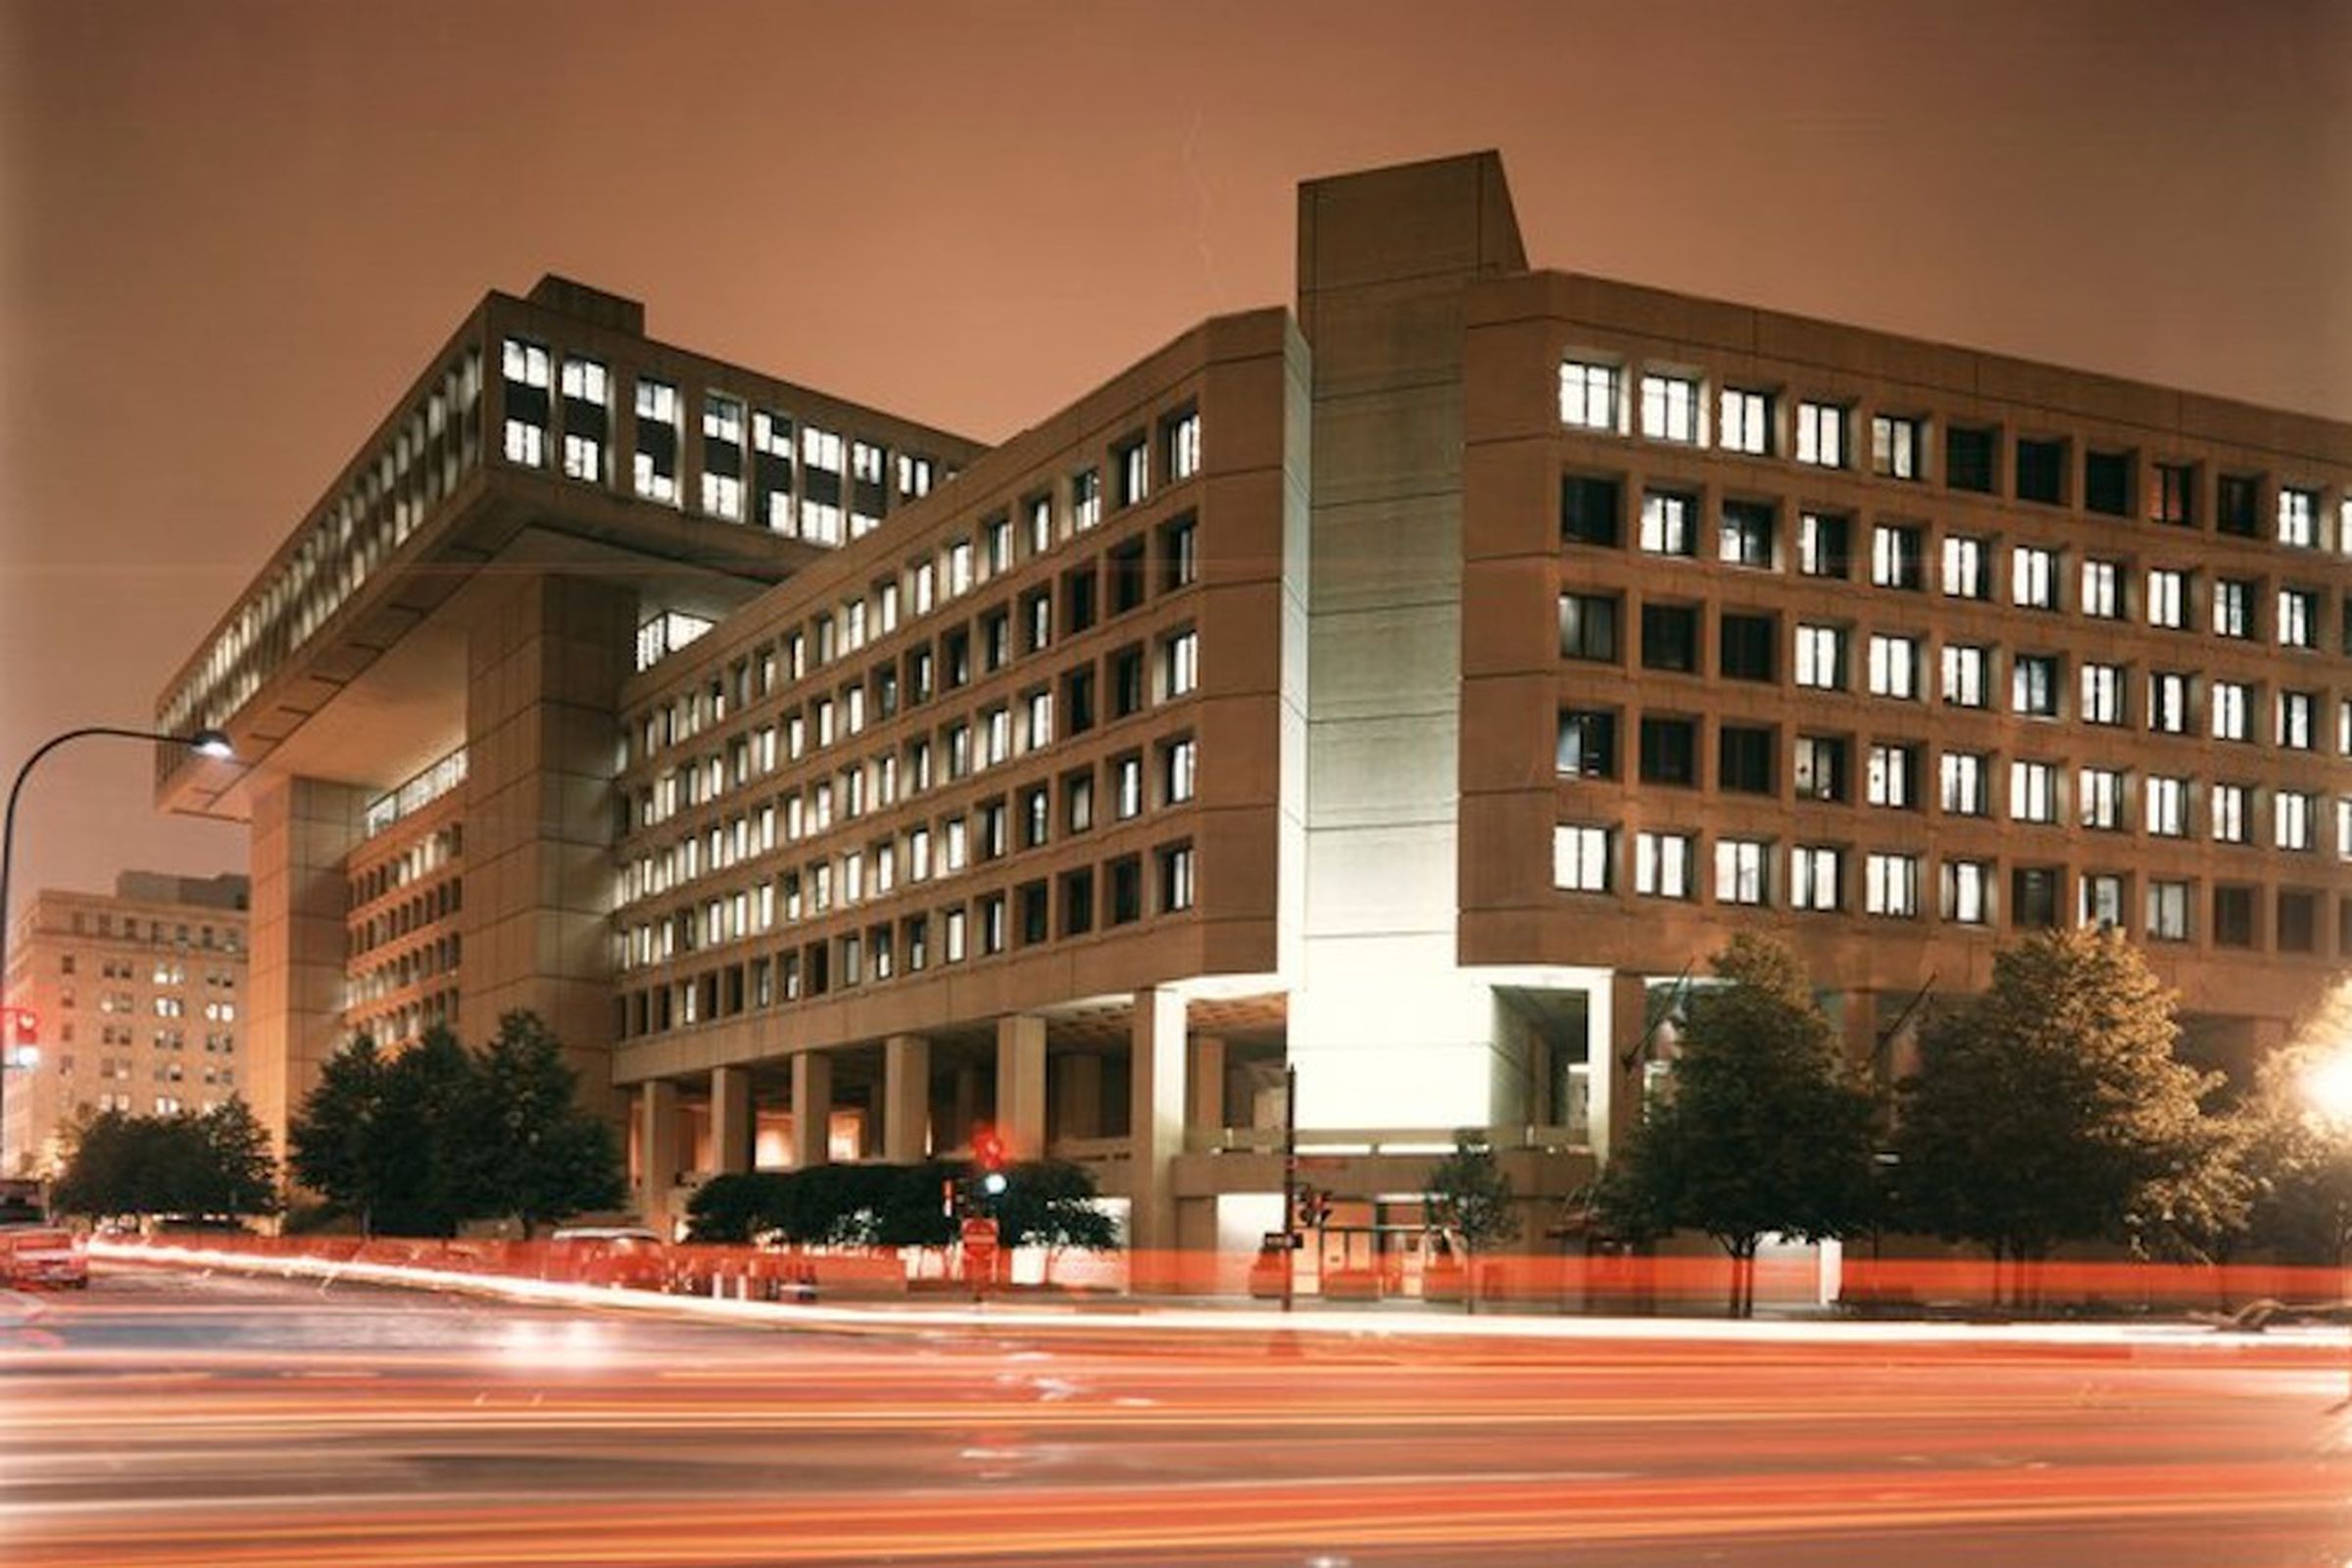 FBI Headquarters, Washington DC (Credit: FBI/Facebook)